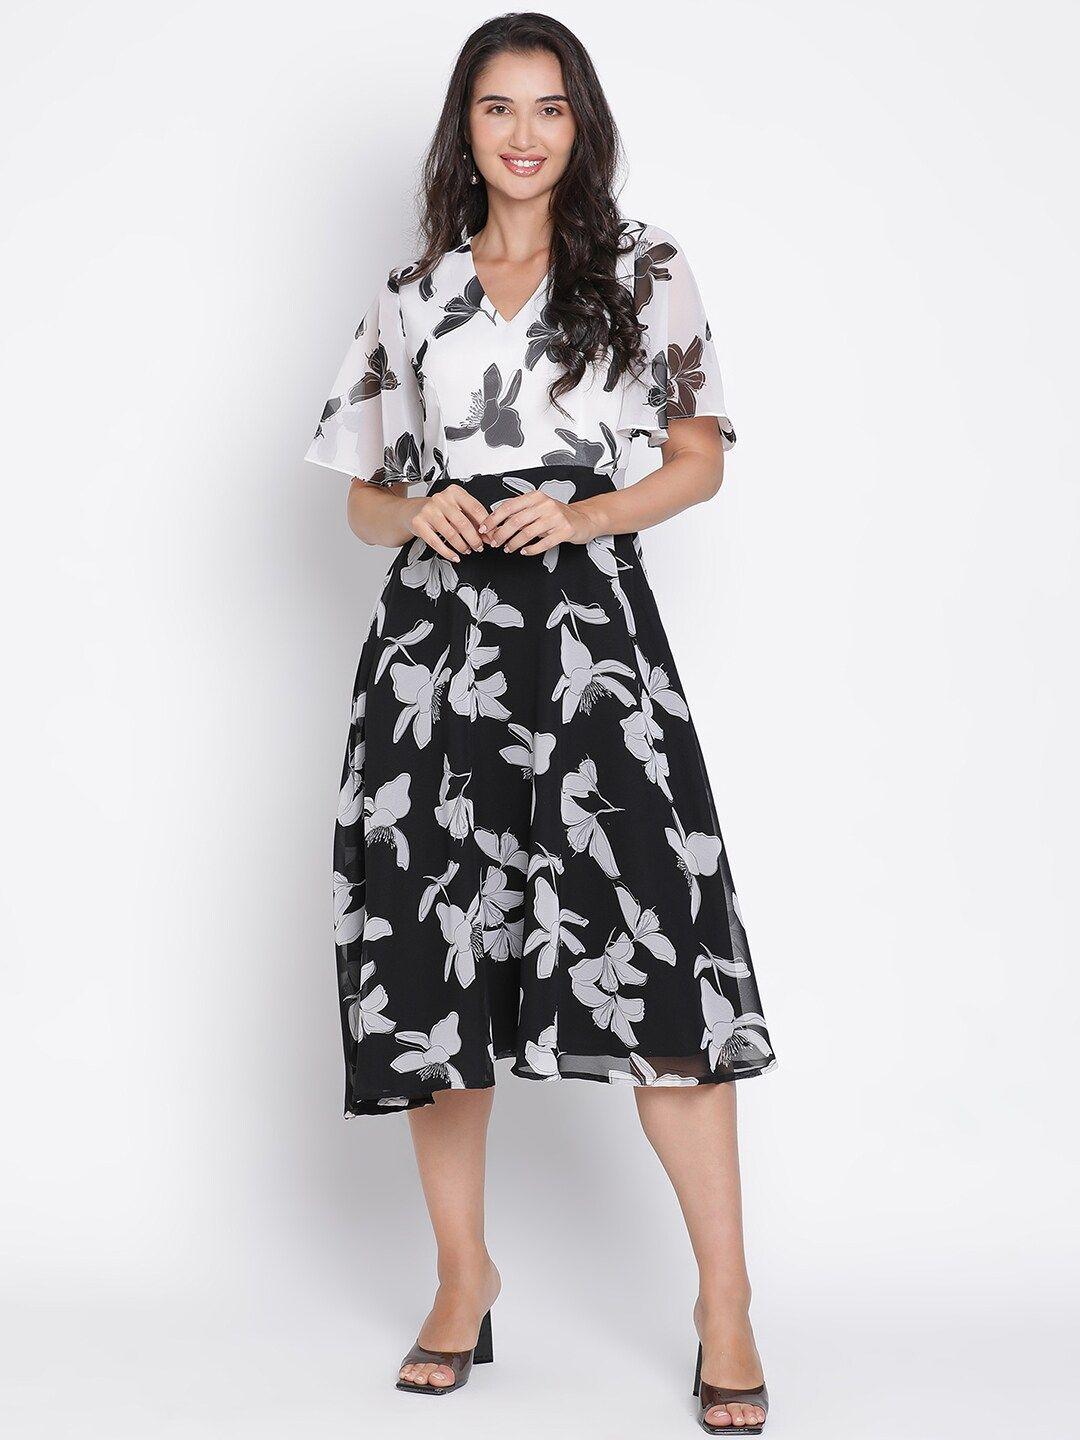 draax-fashions-floral-printed-flared-sleeve-a-line-midi-dress